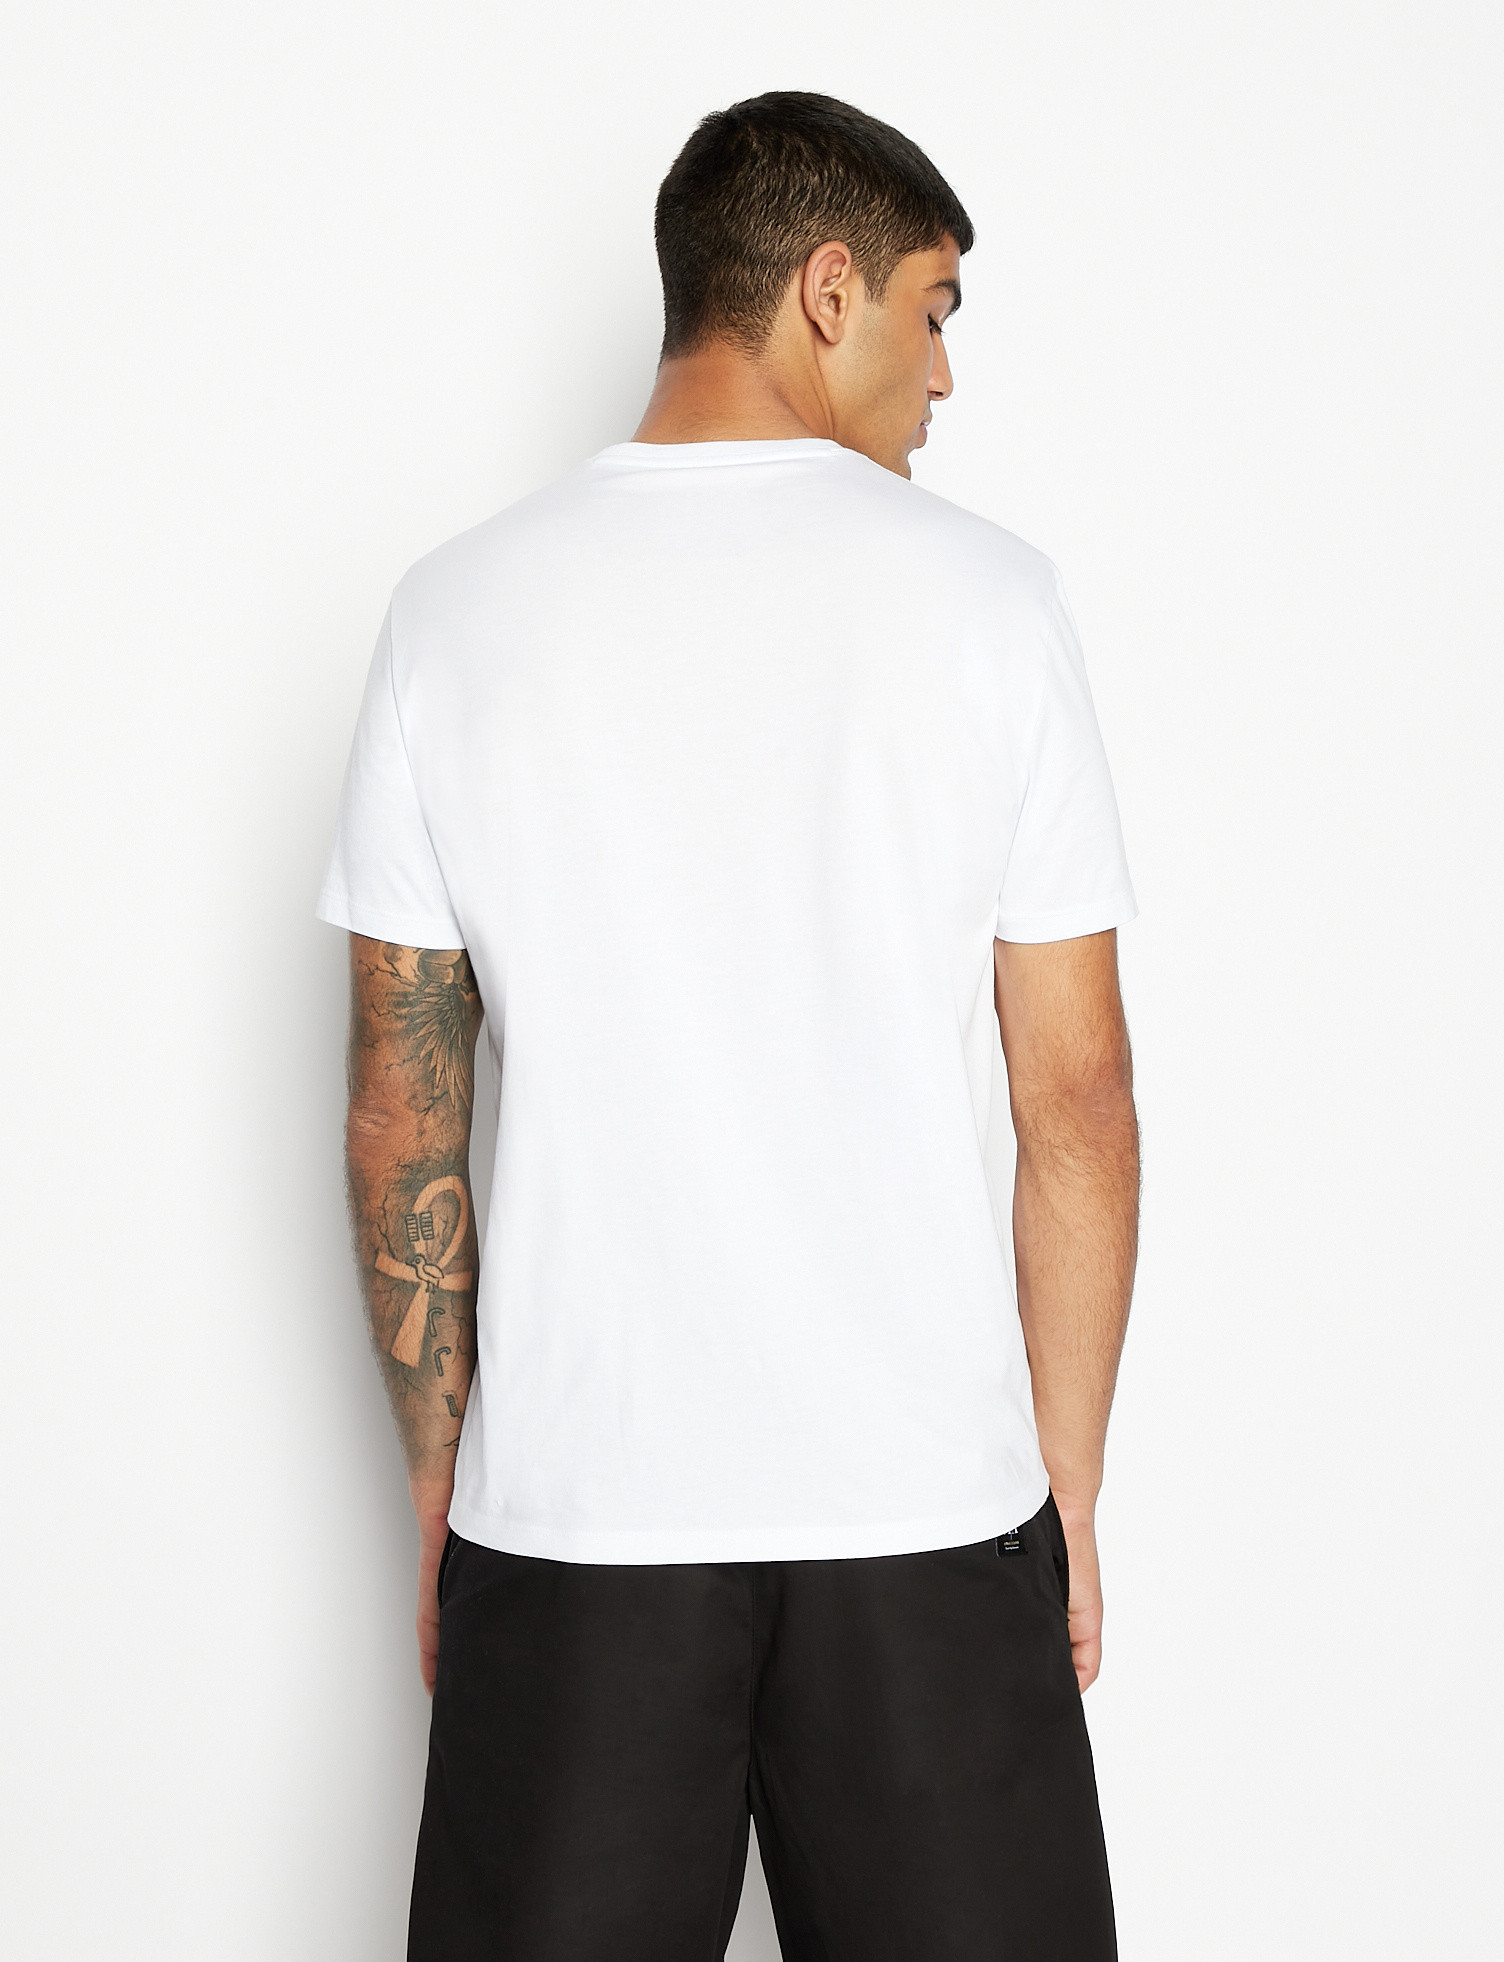 Armani Exchange - Regular fit cotton T-shirt with logo, White, large image number 4